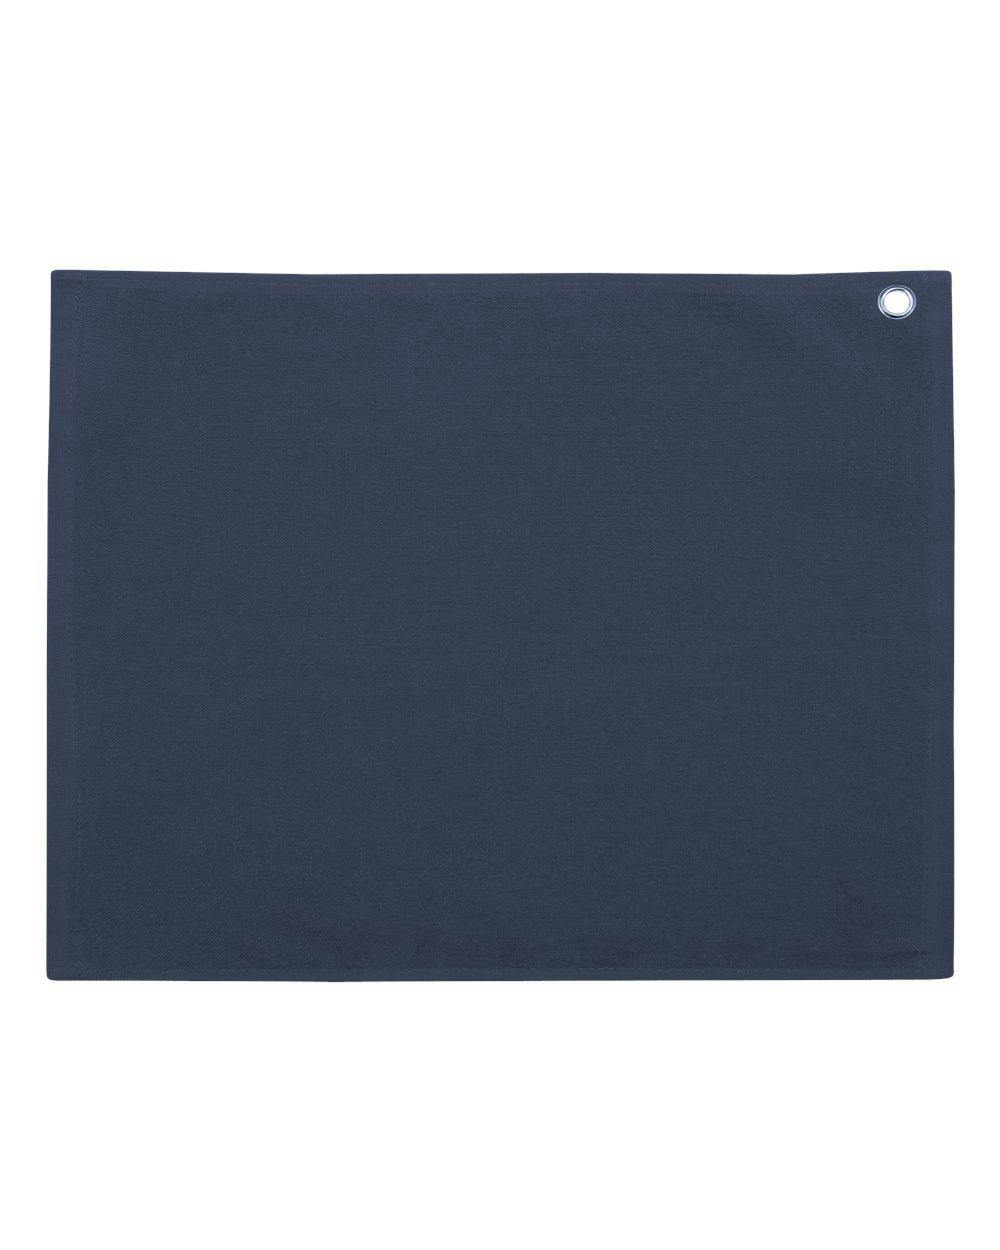 Image for Velour Hemmed Towel with Grommet & Hook - C1518GH